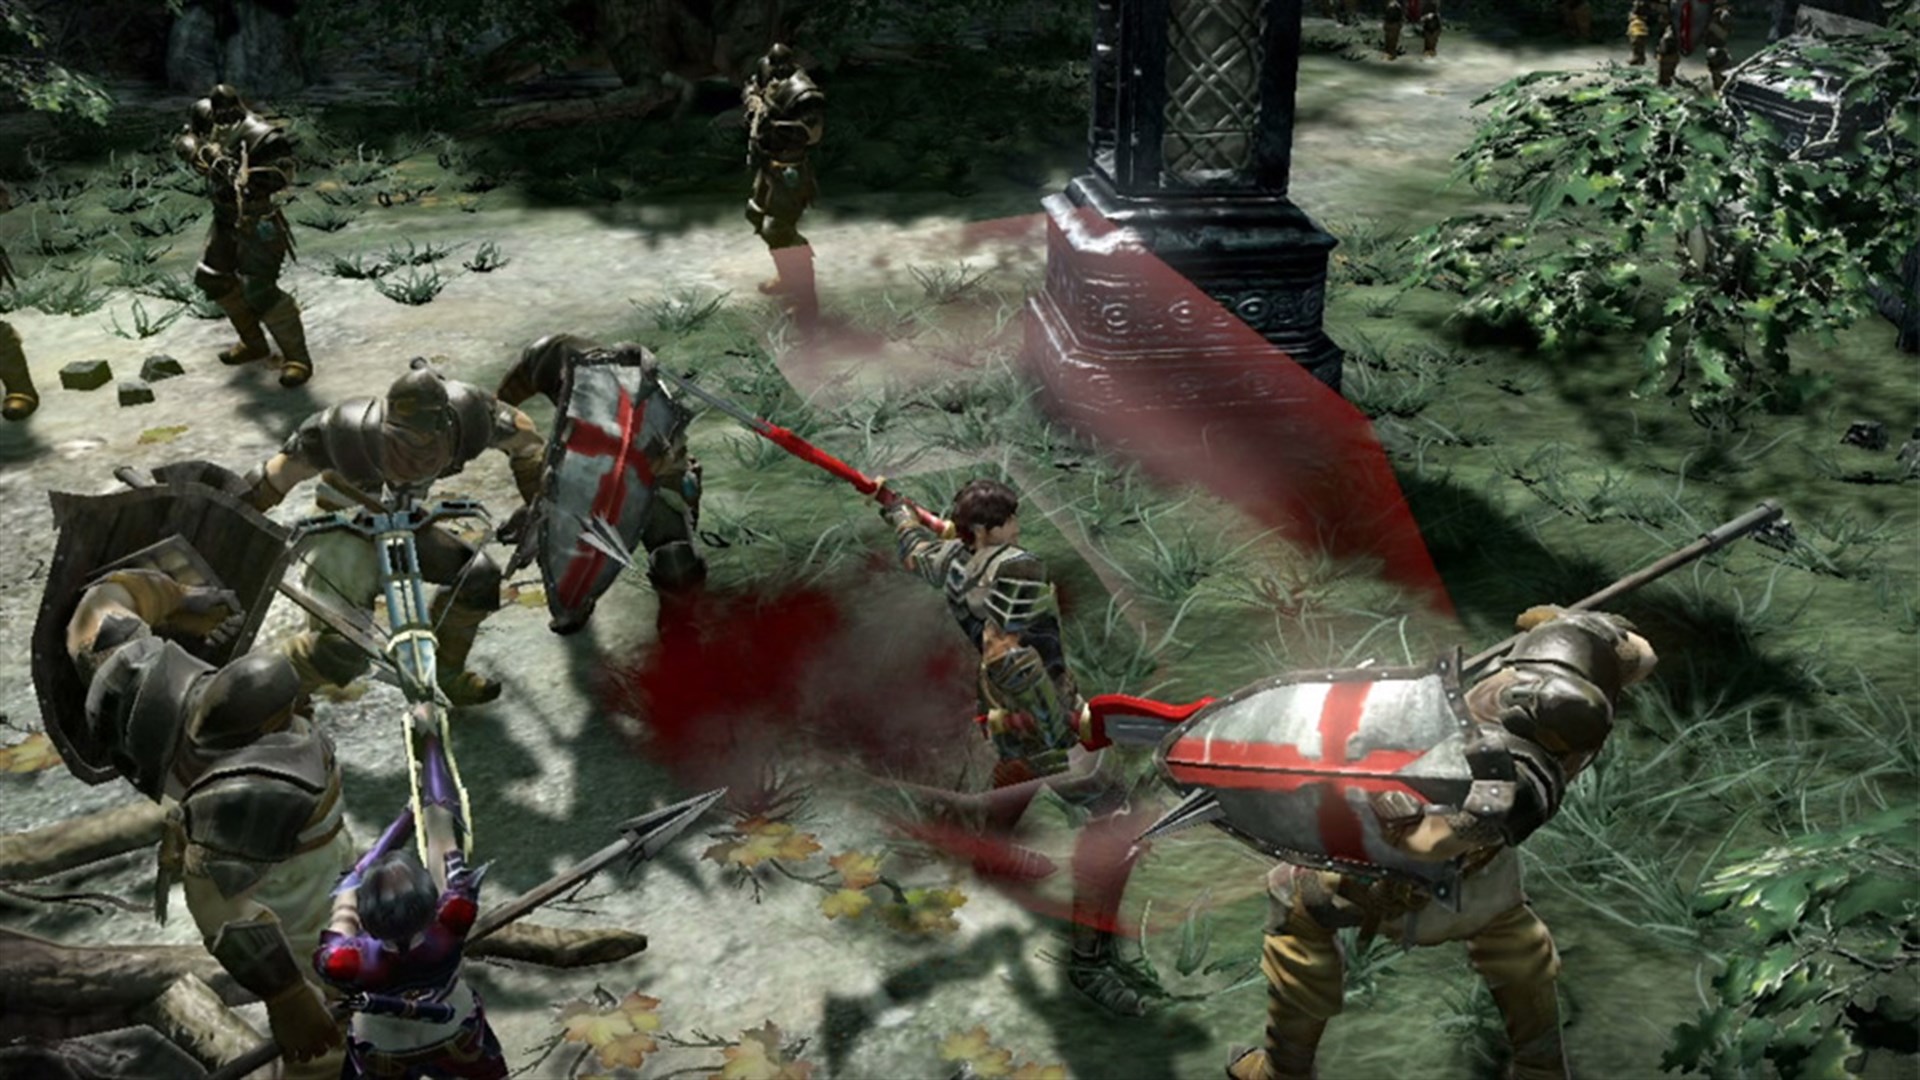 Игры рыцари красный. Игра Blood Knights. Blood Knights Xbox 360. Blood Knights deck13 interactive. Игра про рыцарей на Xbox 360.